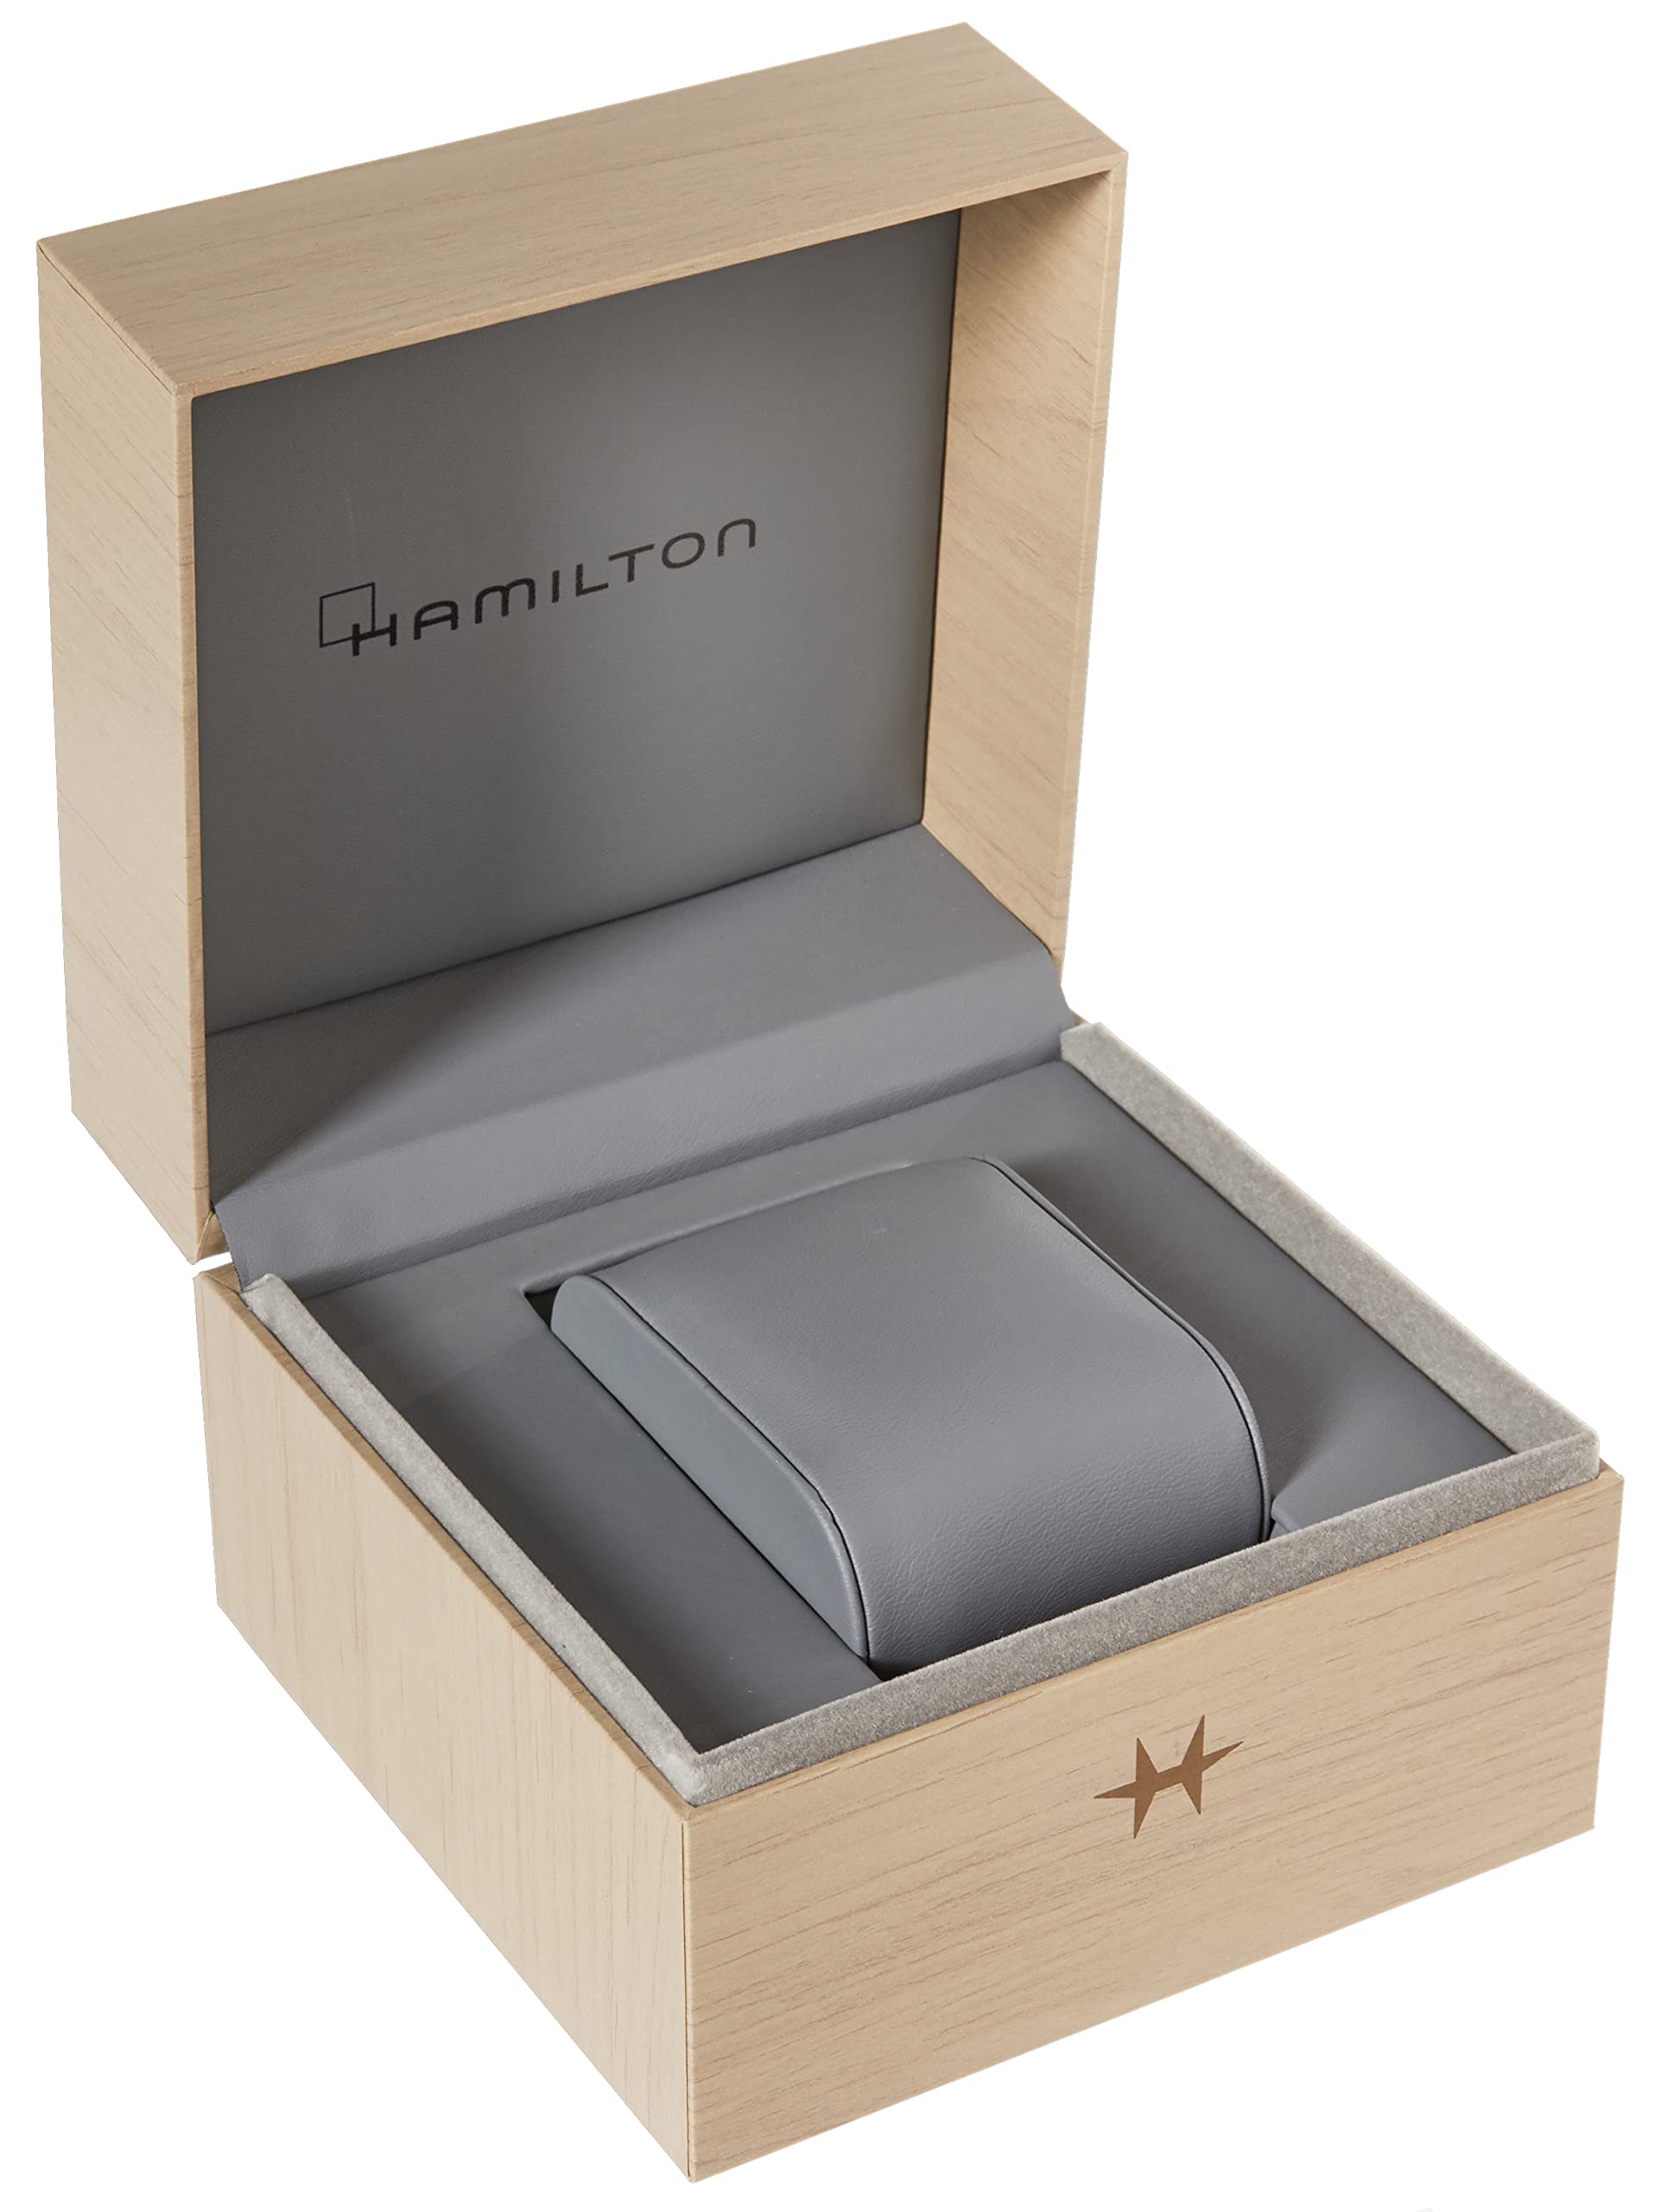 Hamilton Watch Khaki Aviation Converter Swiss Automatic Watch 42mm Case, Black Dial, Silver Stainless Steel Bracelet (Model: H76615130)